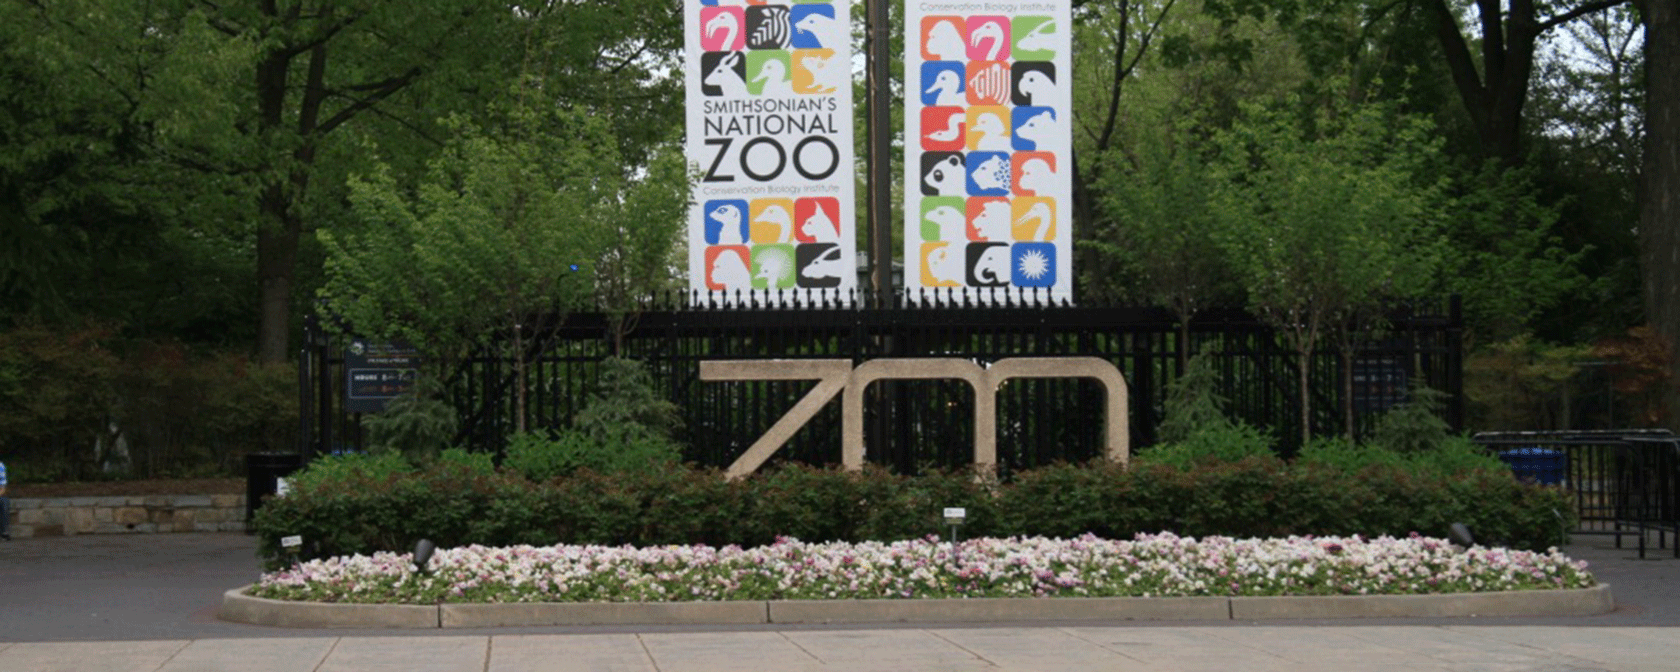 Signo de Zoo en Woodley Park